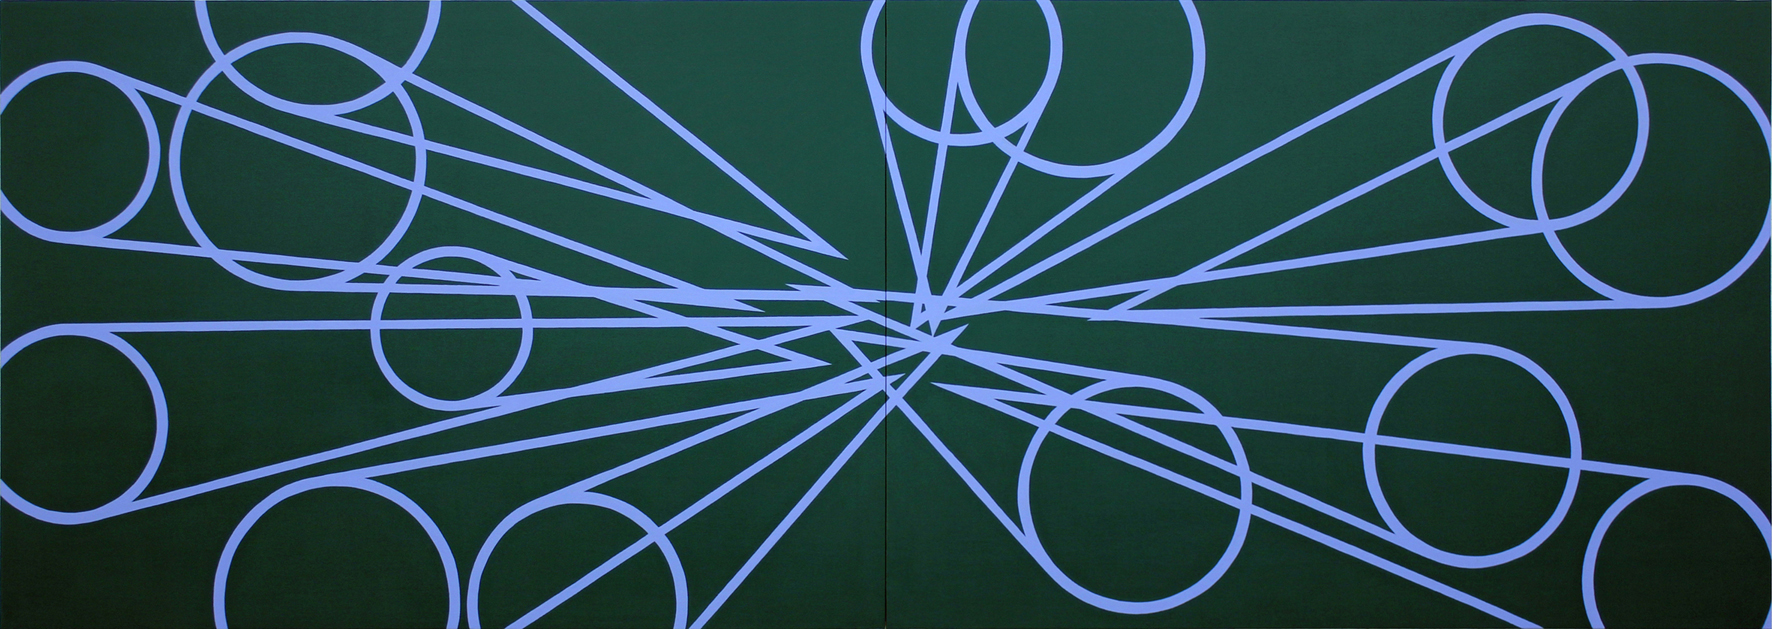 Memorias imaginadas, (diptych), 2014, acrylic on canvas, 114 x 325 cm.